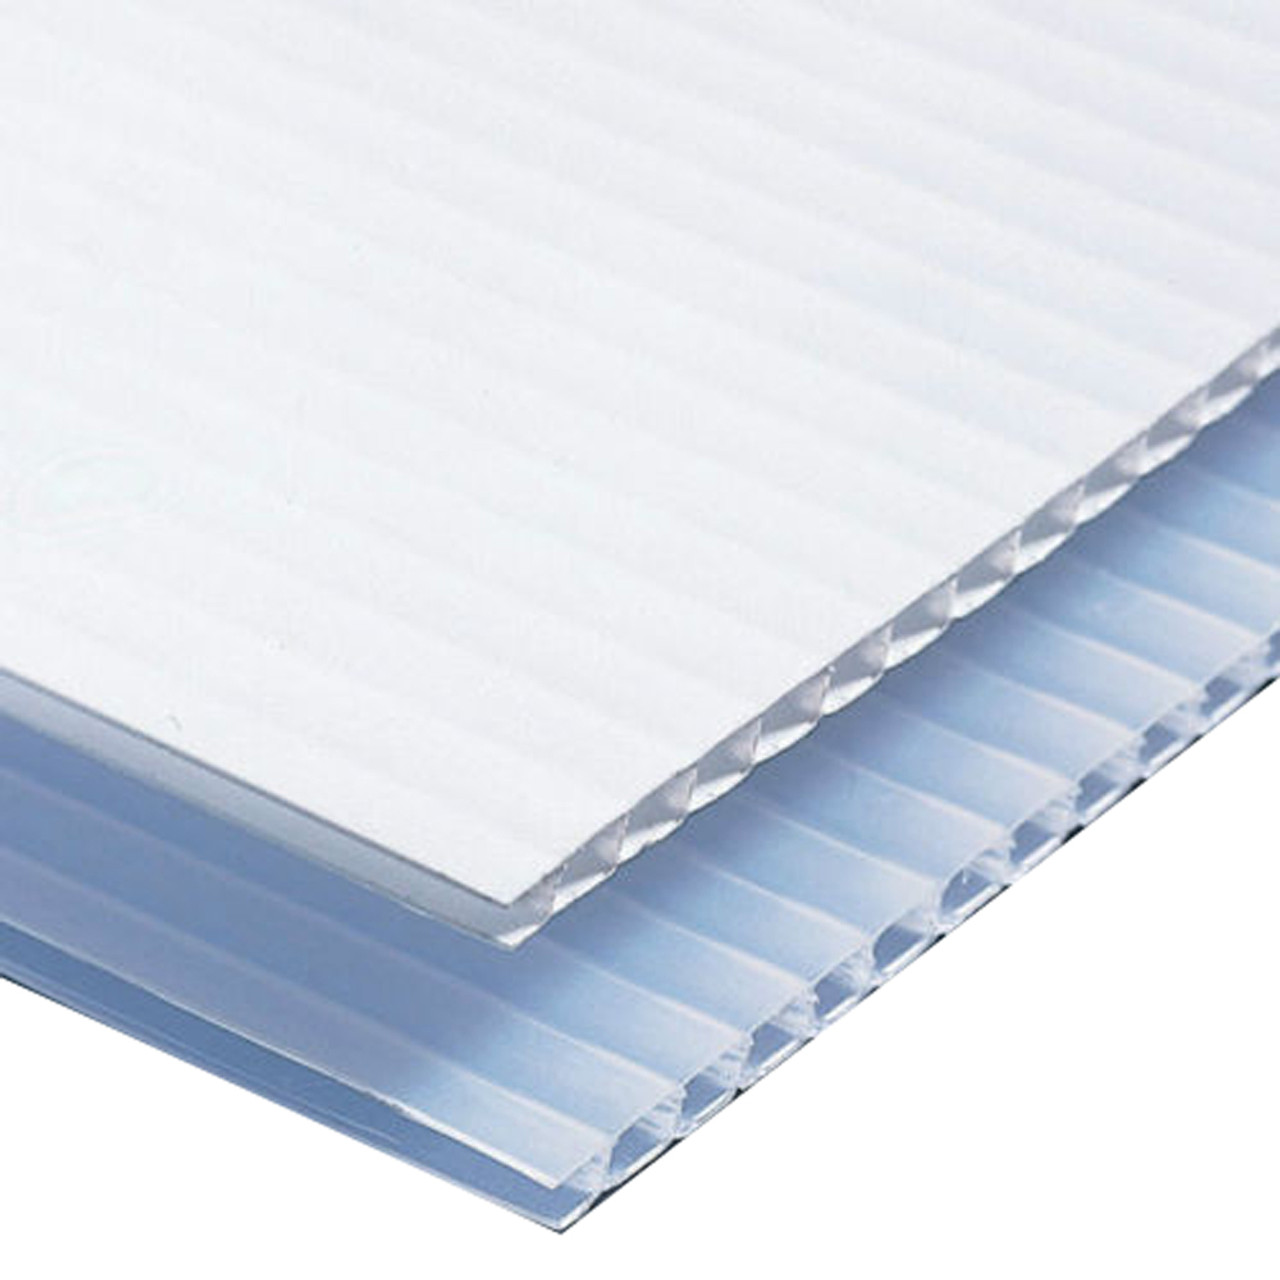 Plastic-Craft  Polycarbonate White Translucent Sheet